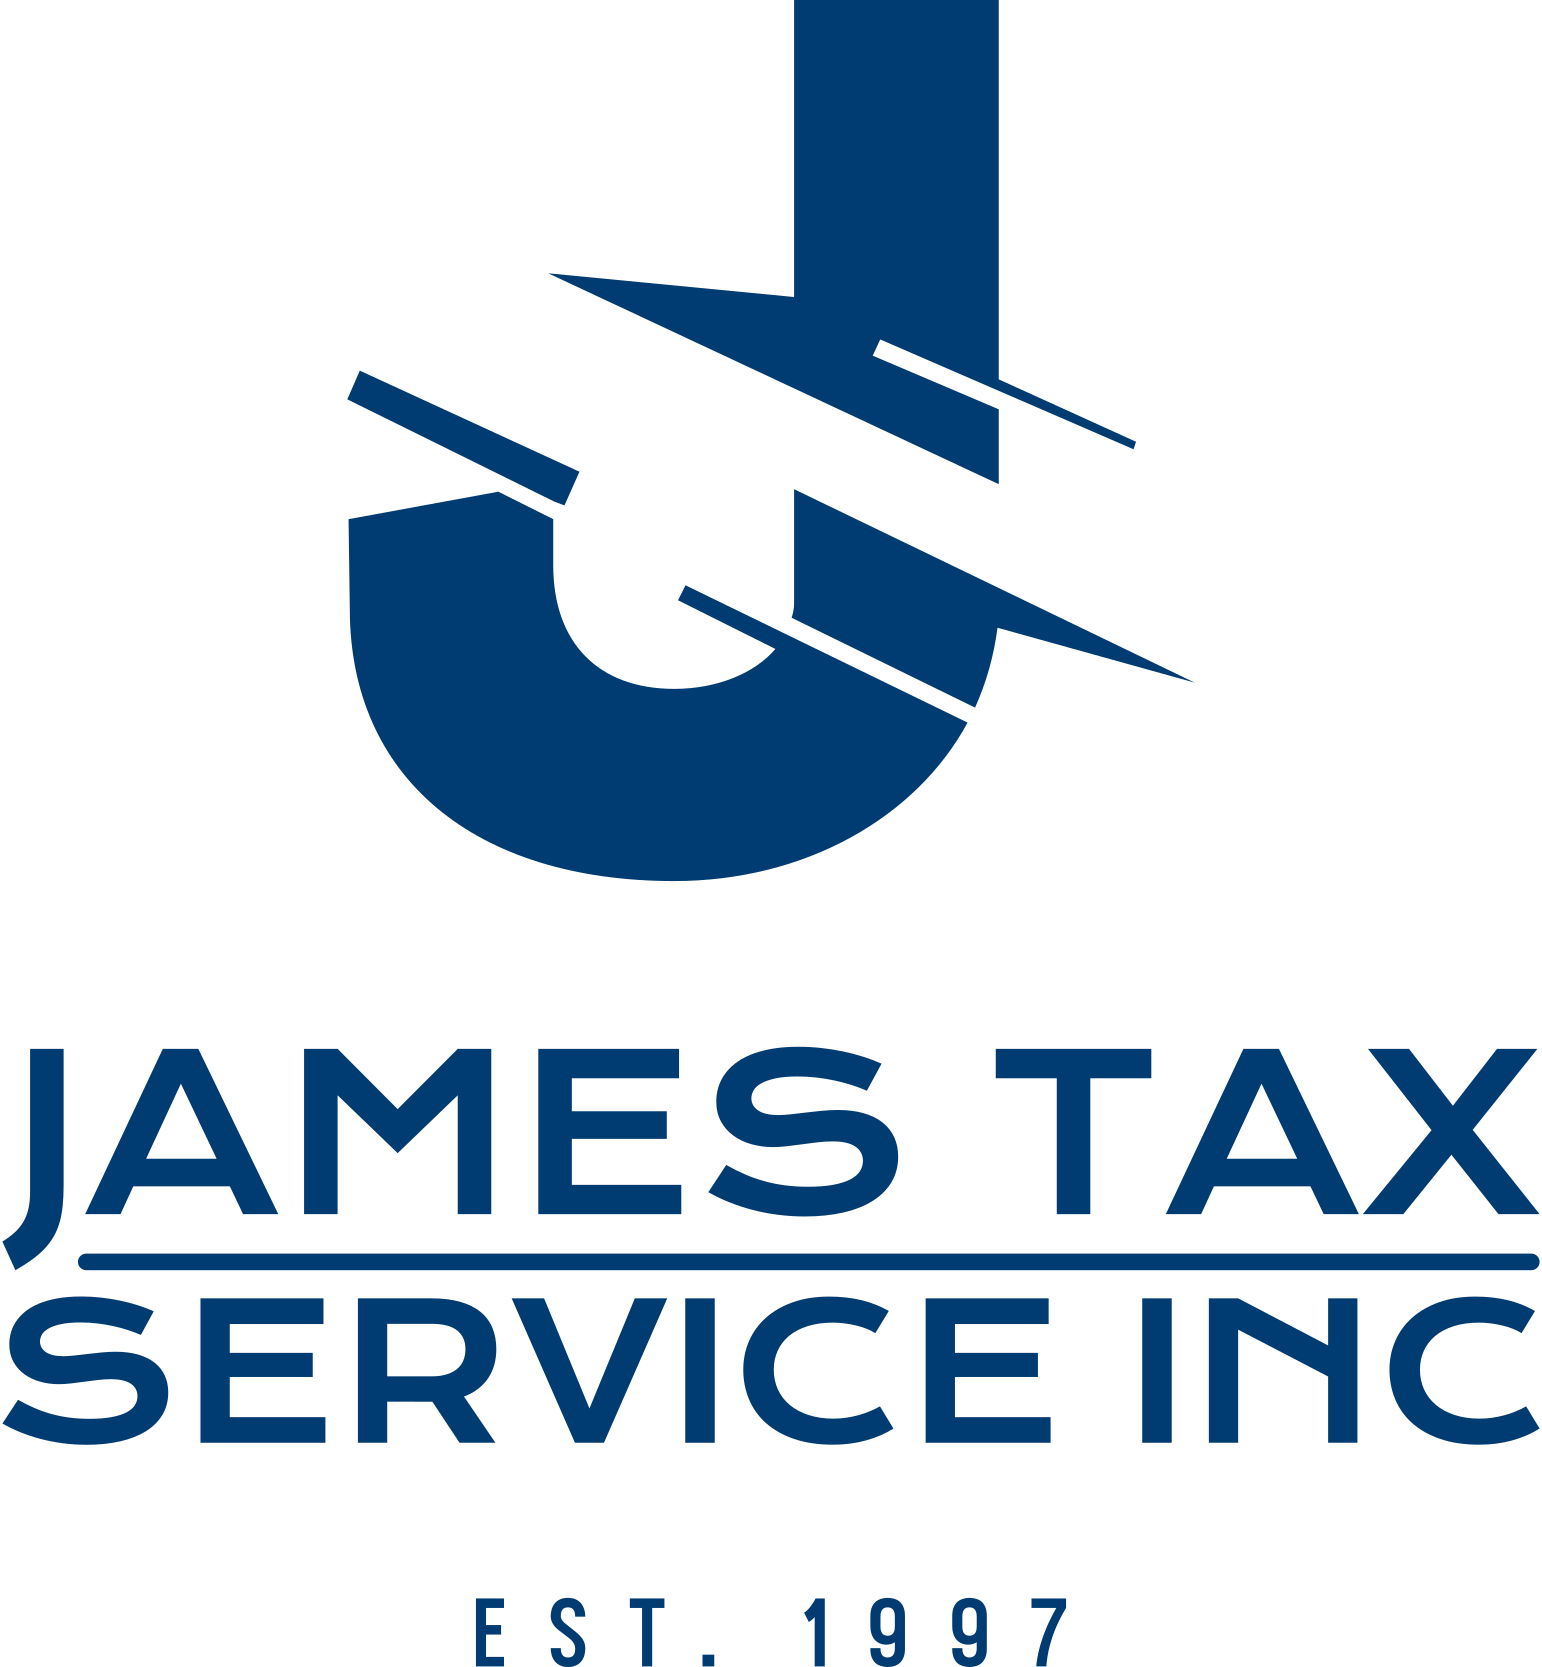 James Tax Service, Inc.